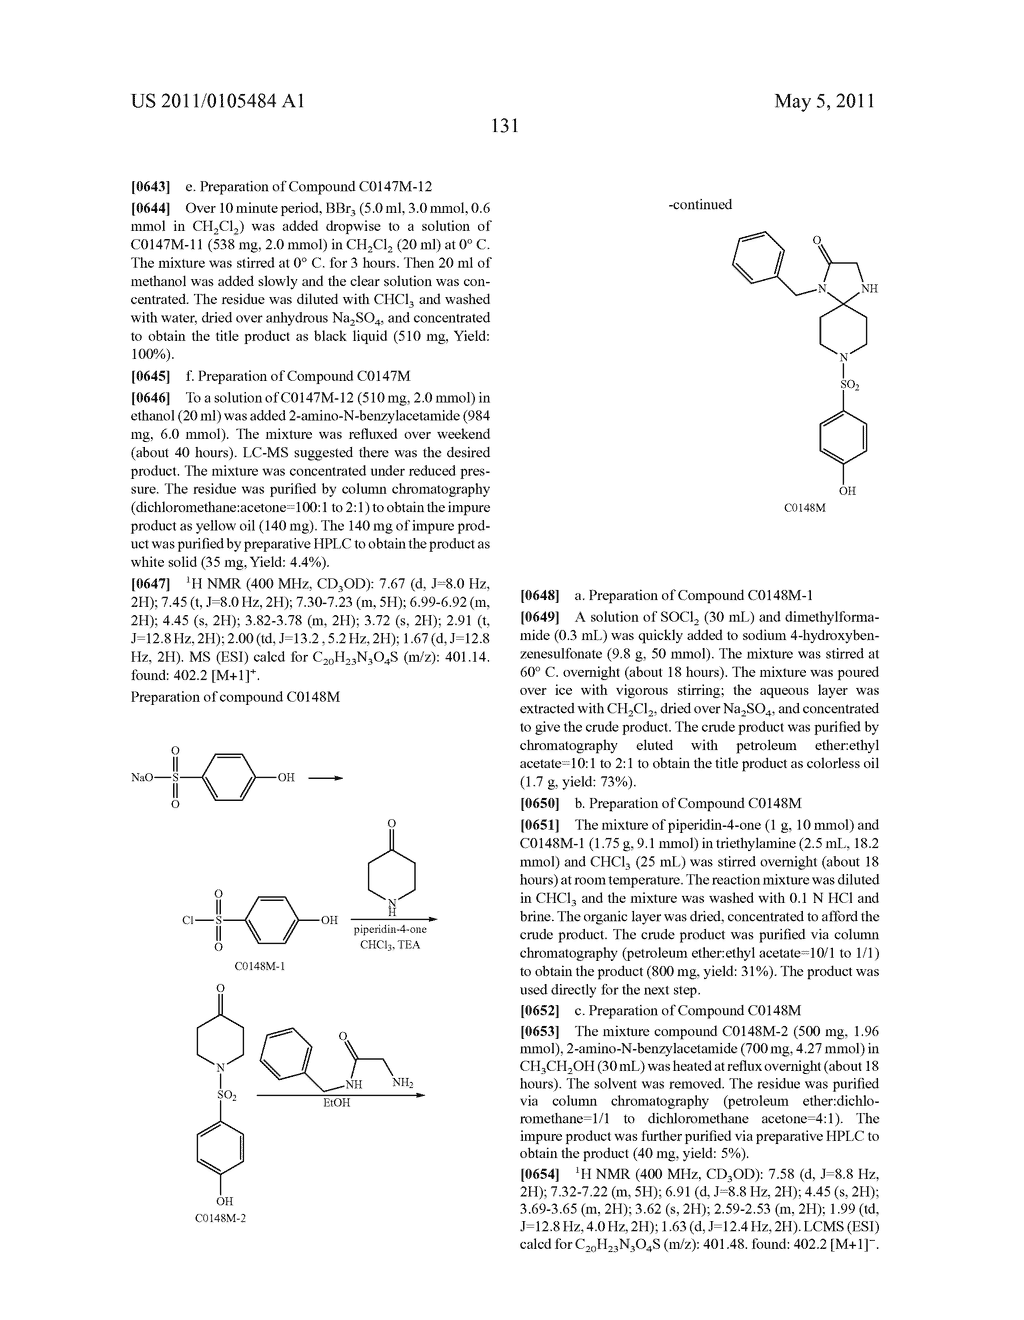 FILAMIN A-BINDING ANTI-INFLAMMATORY ANALGESIC - diagram, schematic, and image 132